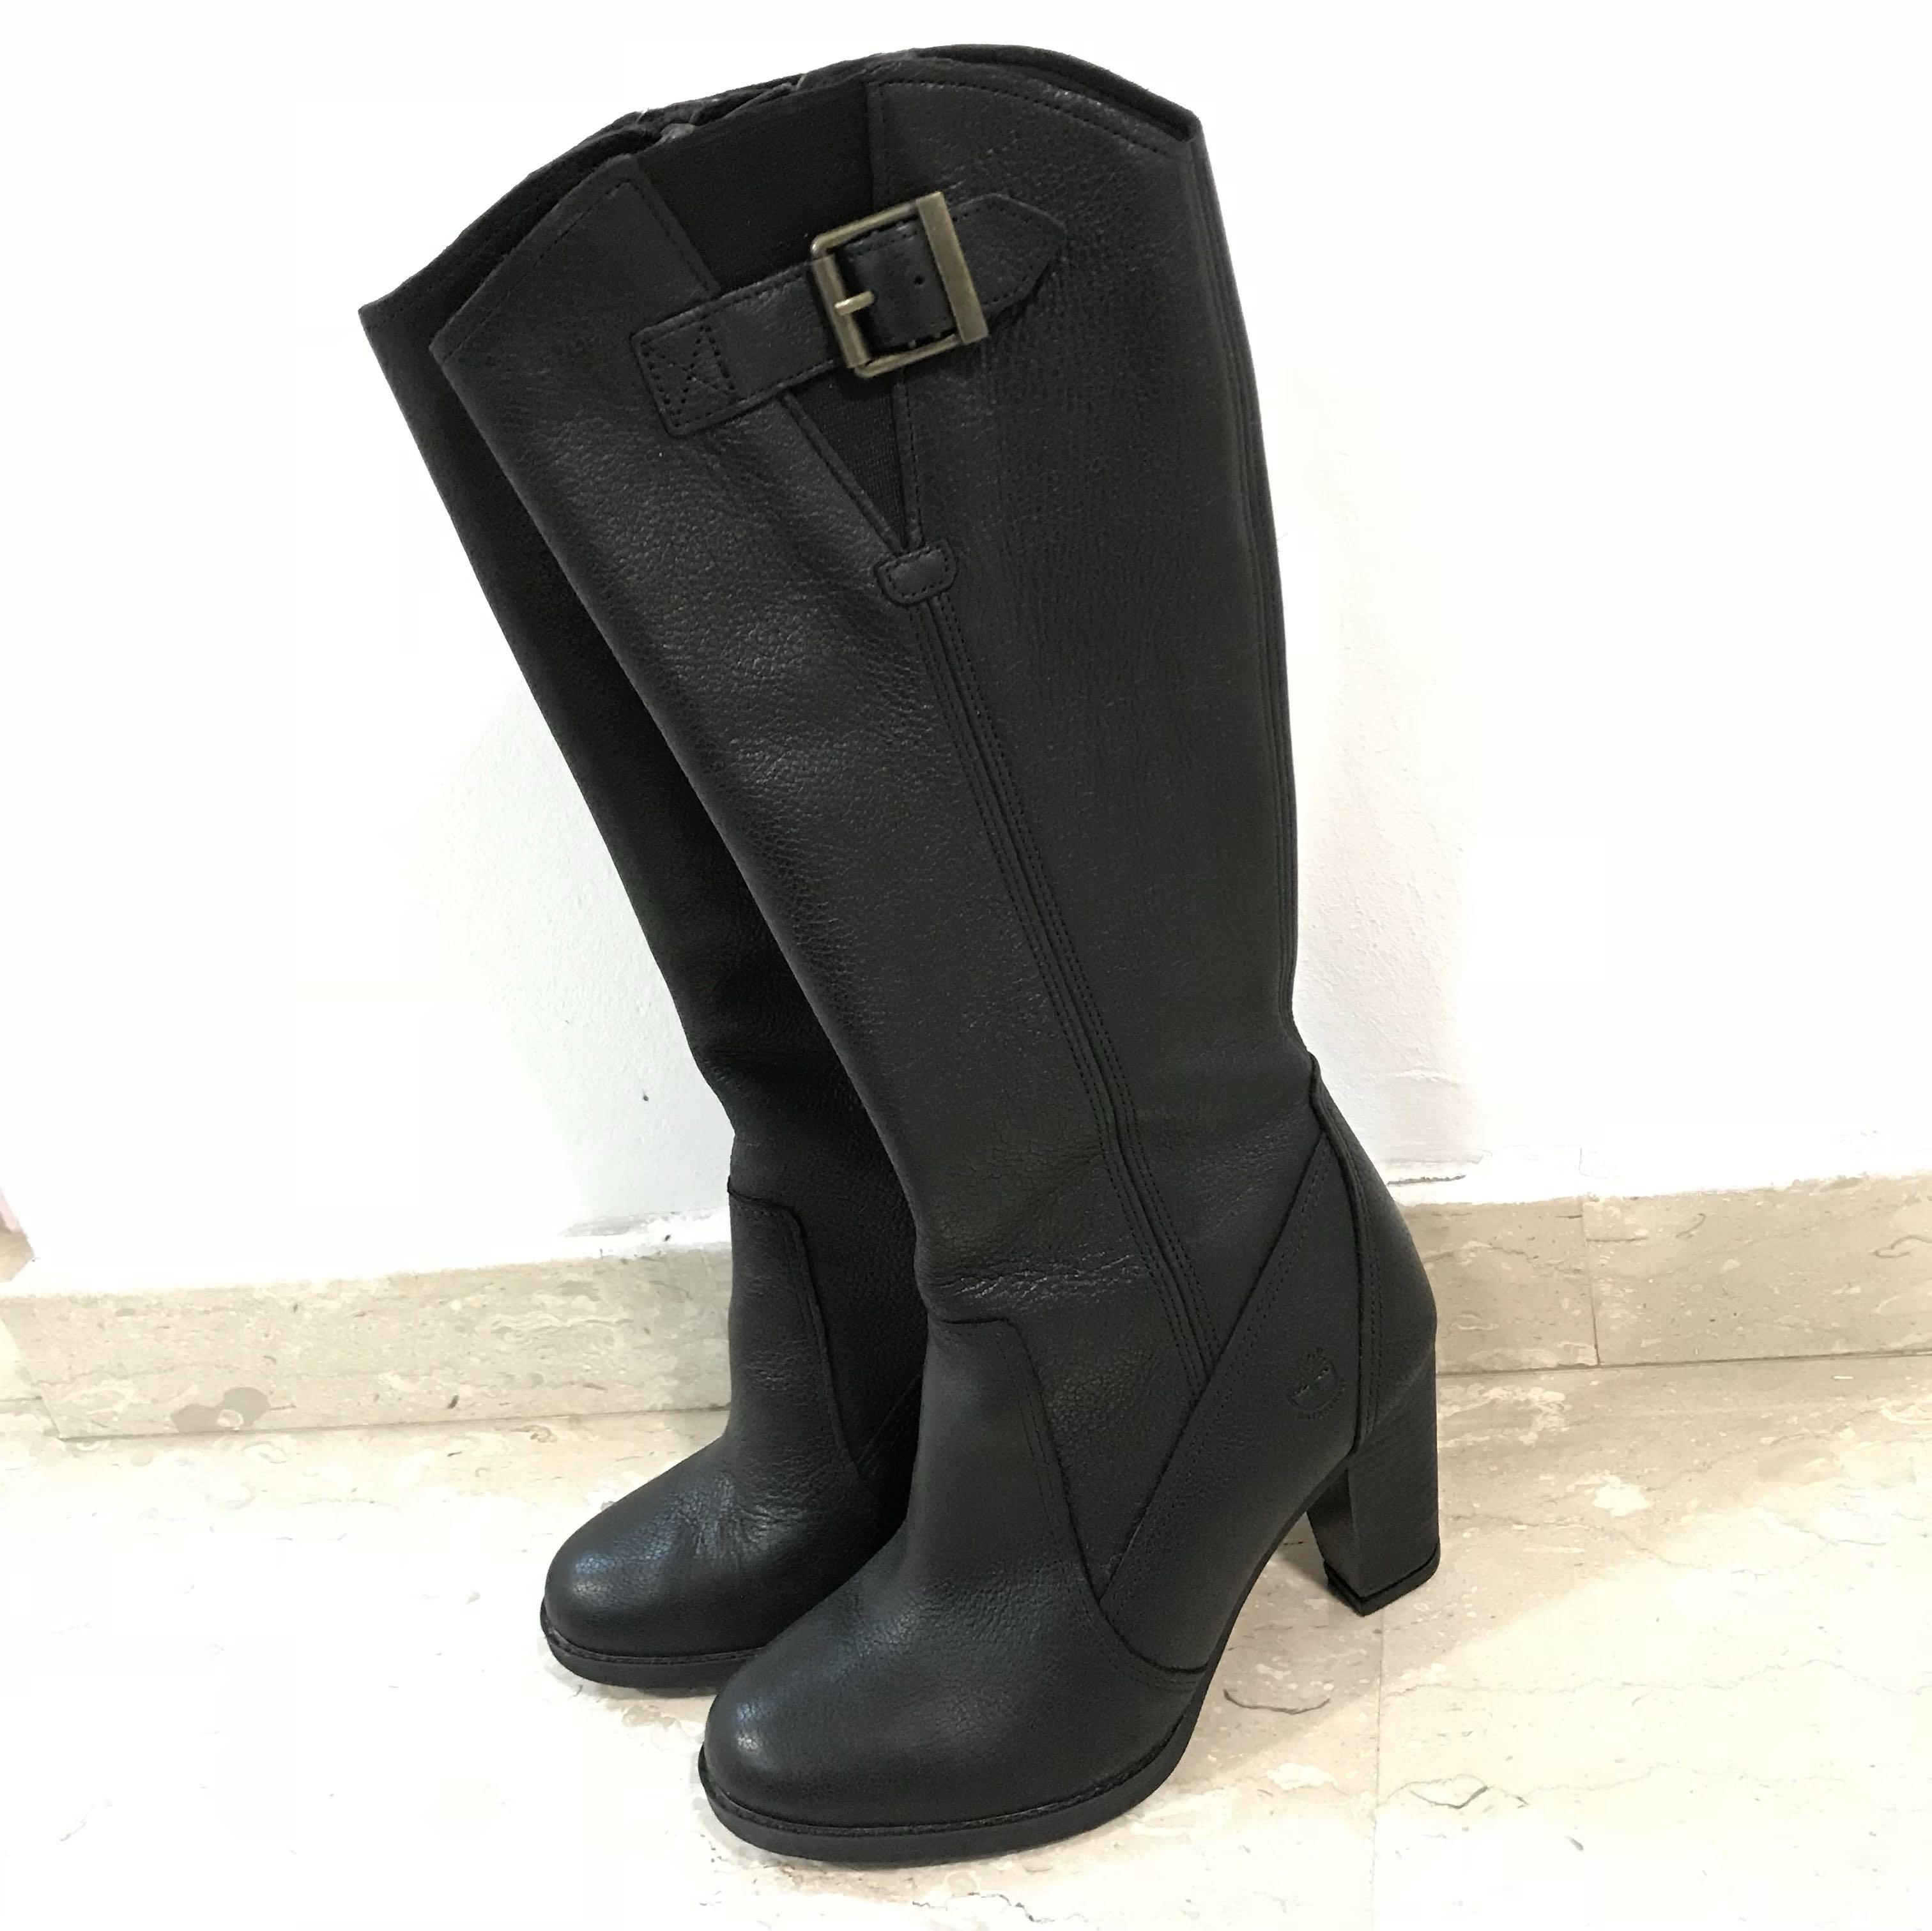 womens knee high timberland boots sale